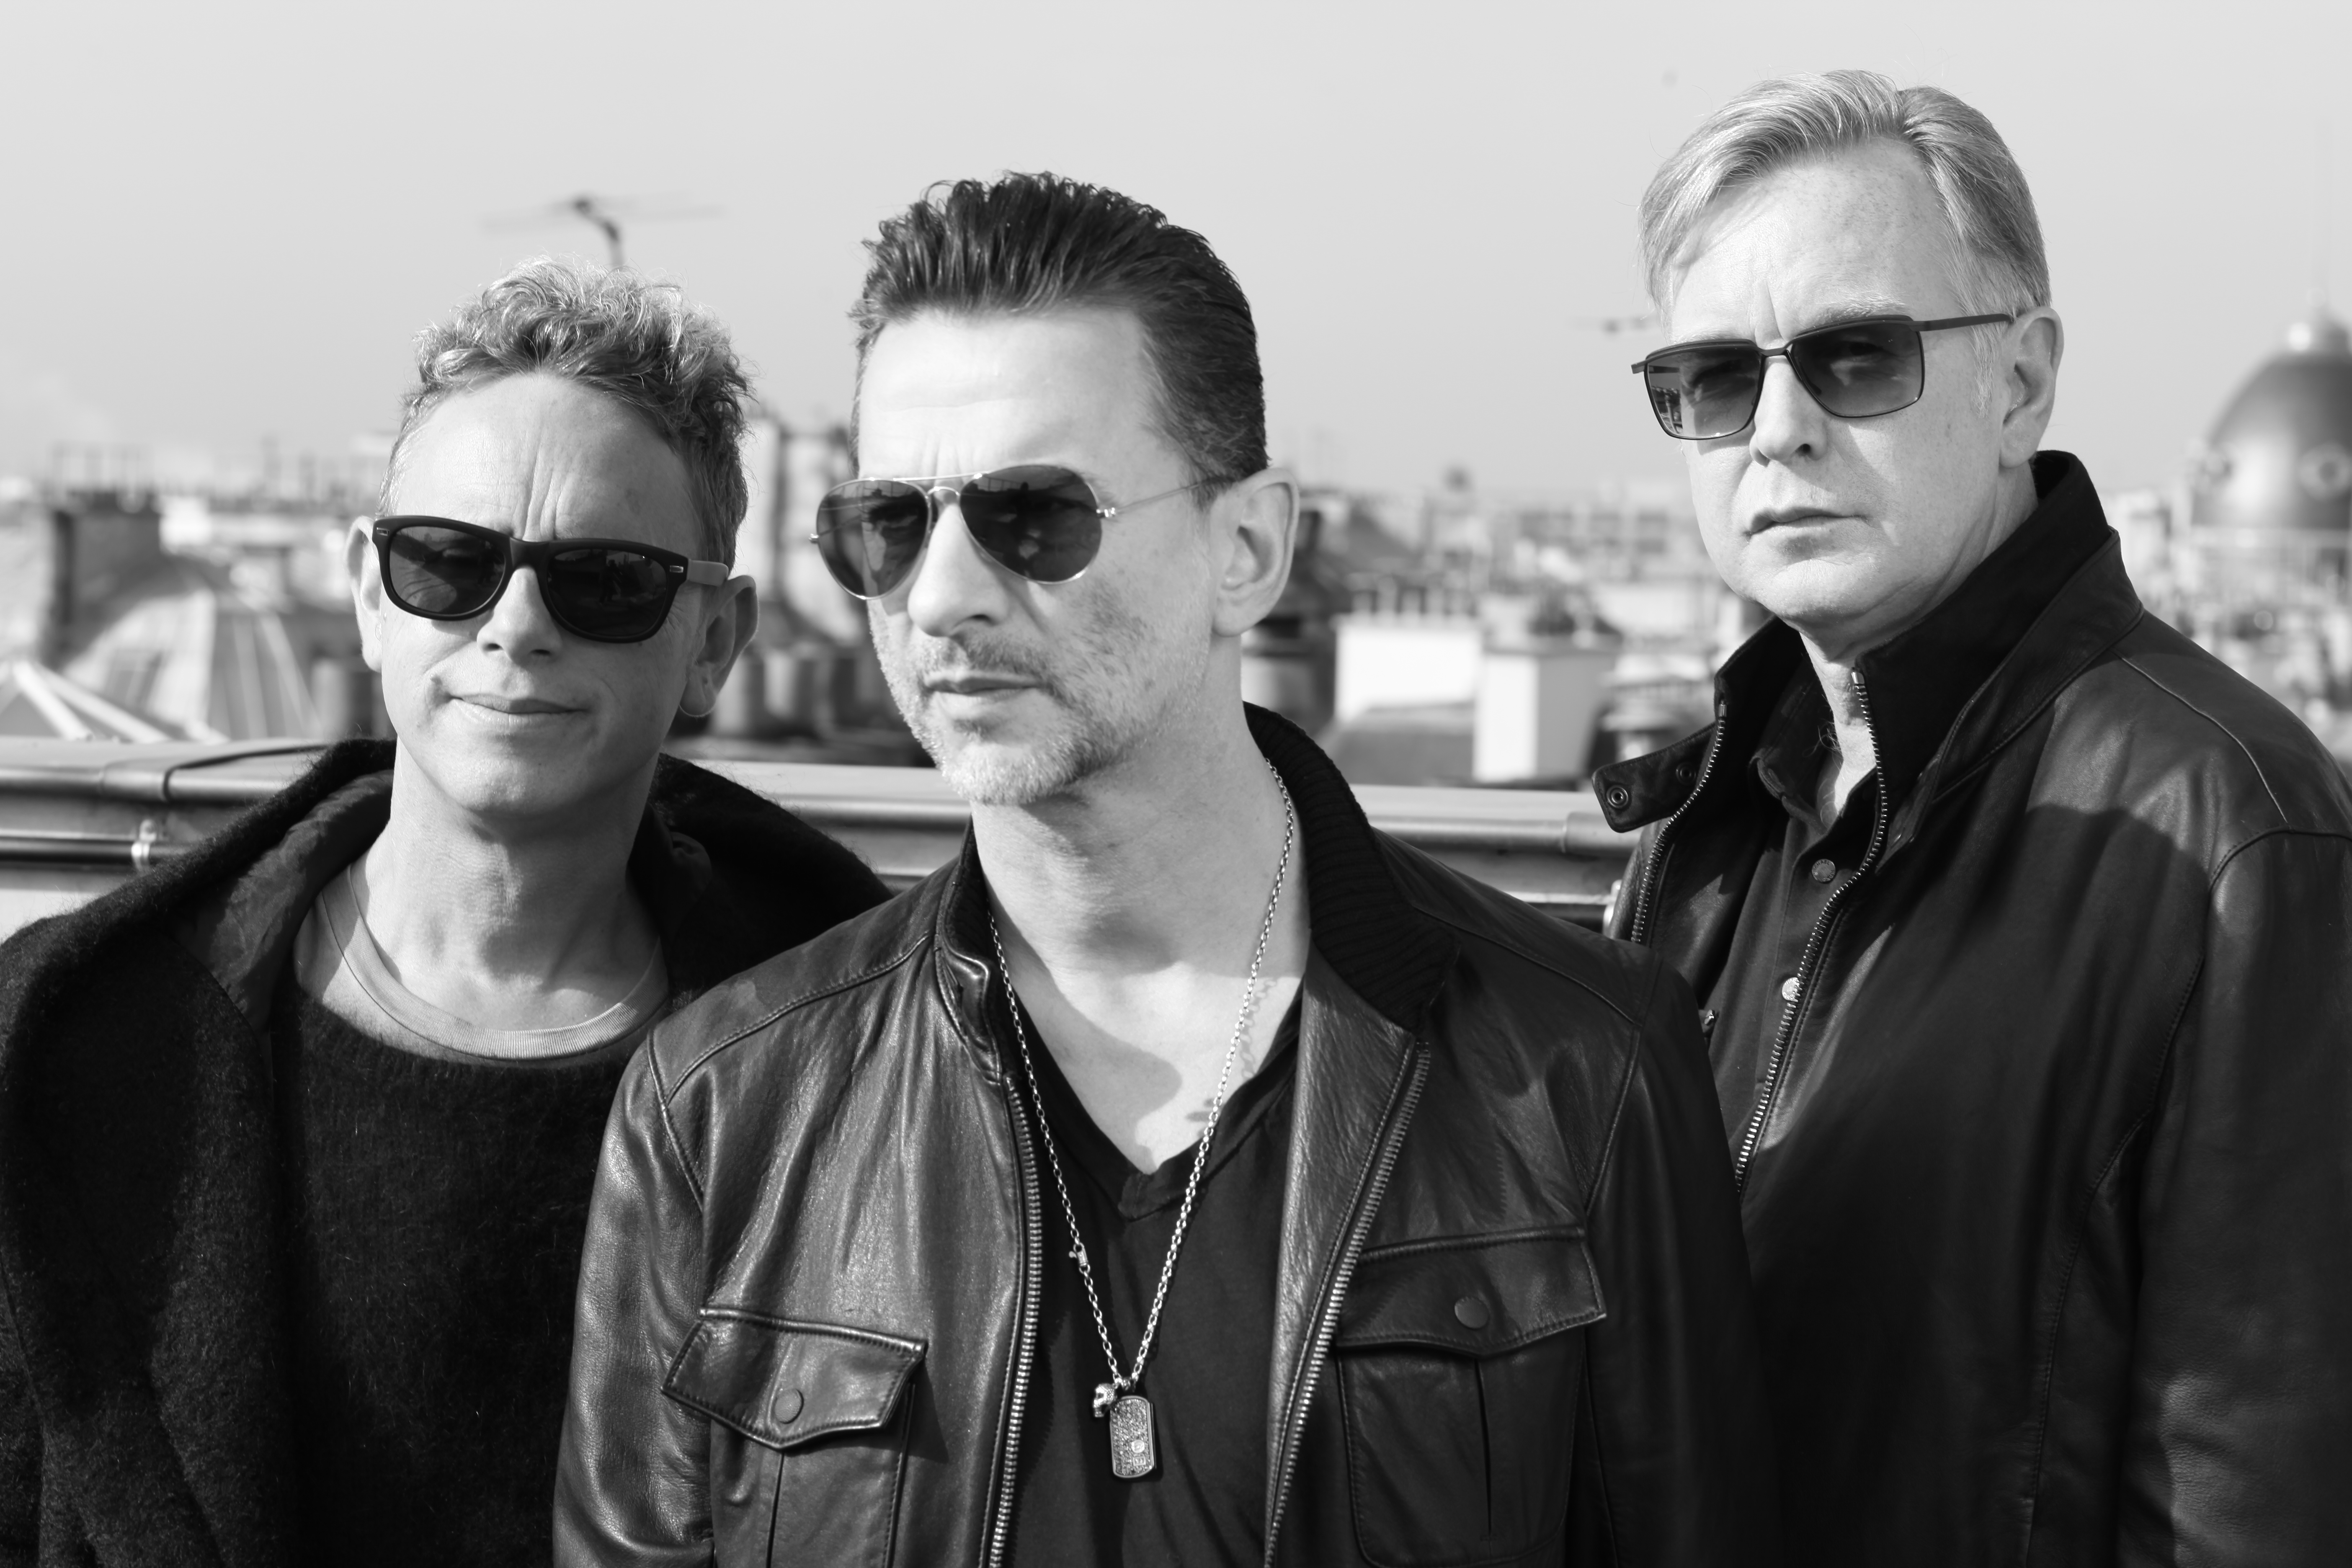 Music Depeche Mode HD Wallpaper | Background Image